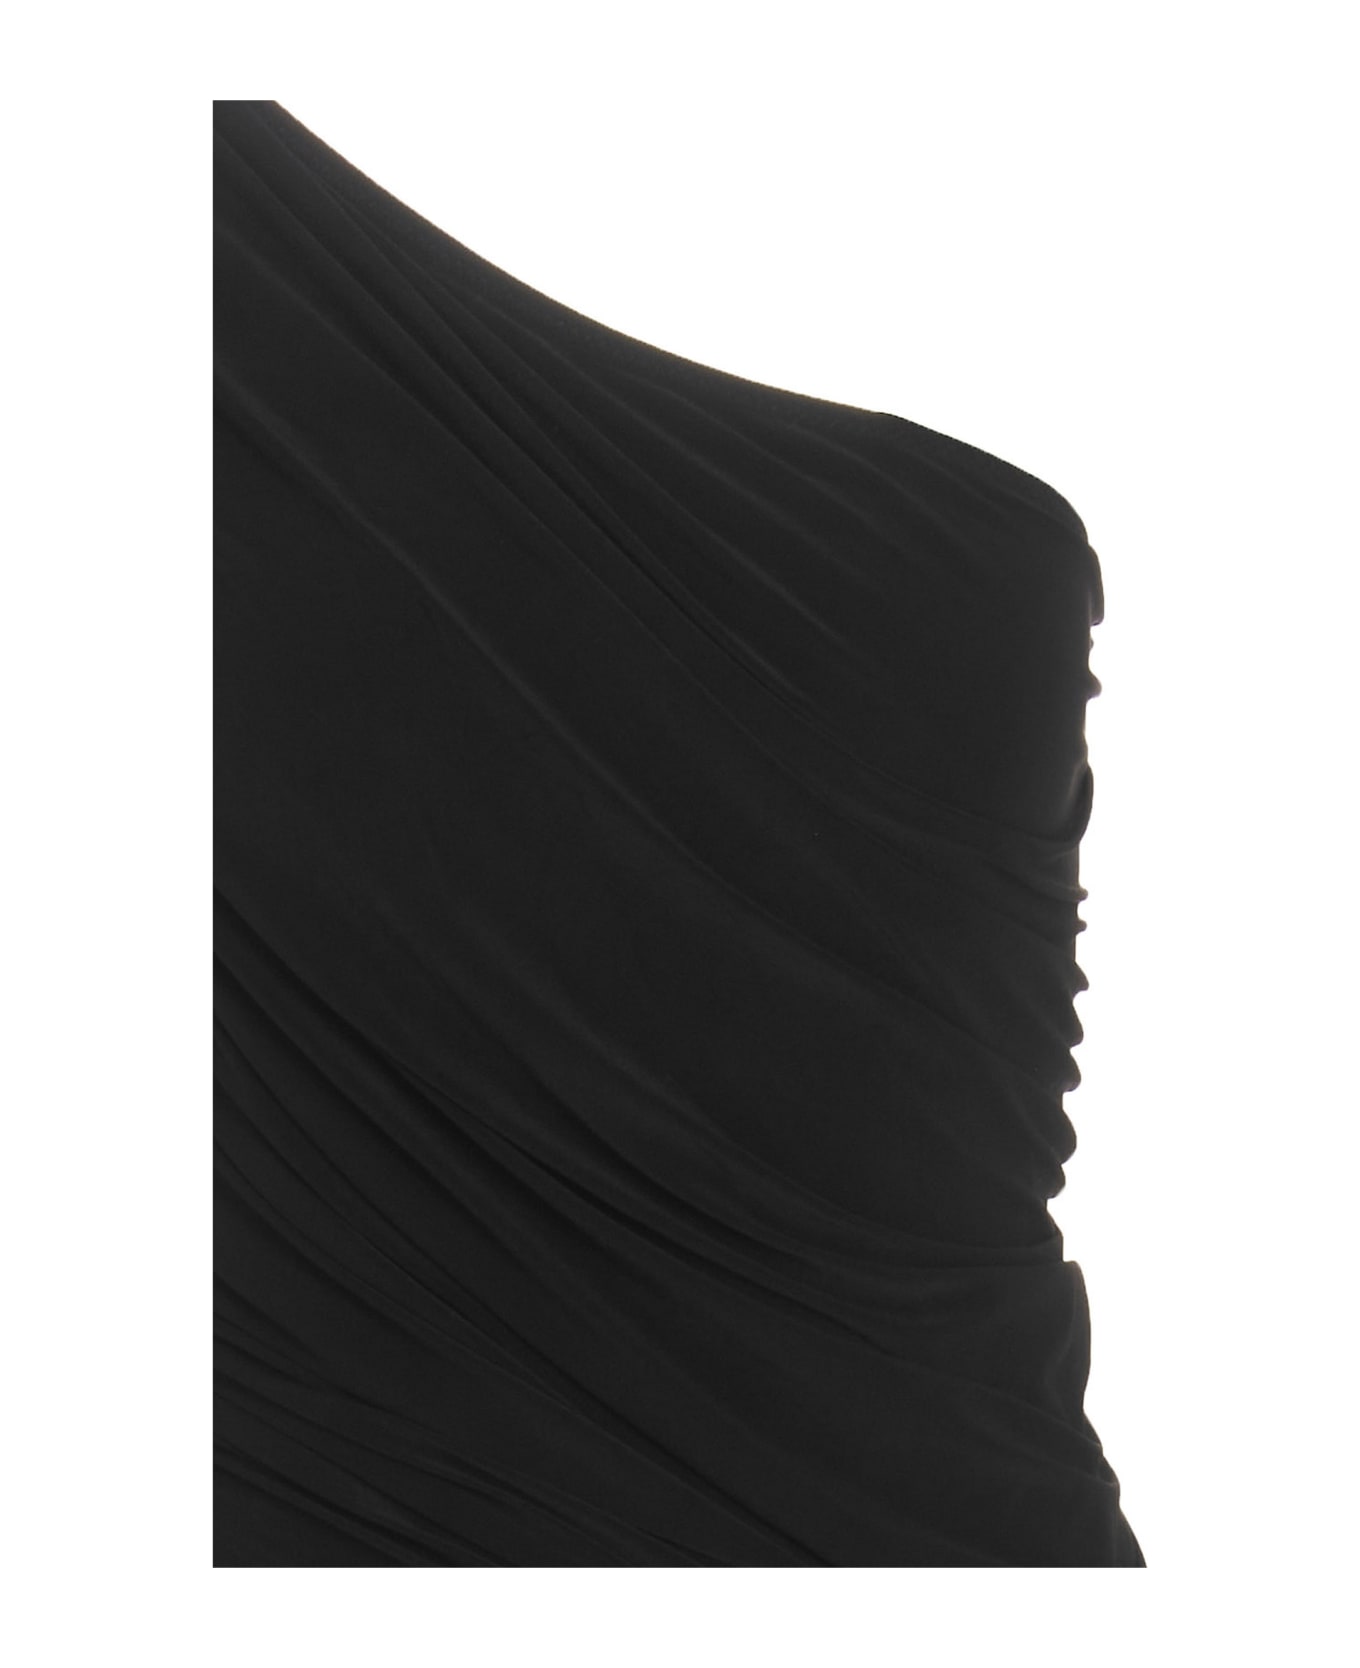 Norma Kamali 'diana' Dress - Black